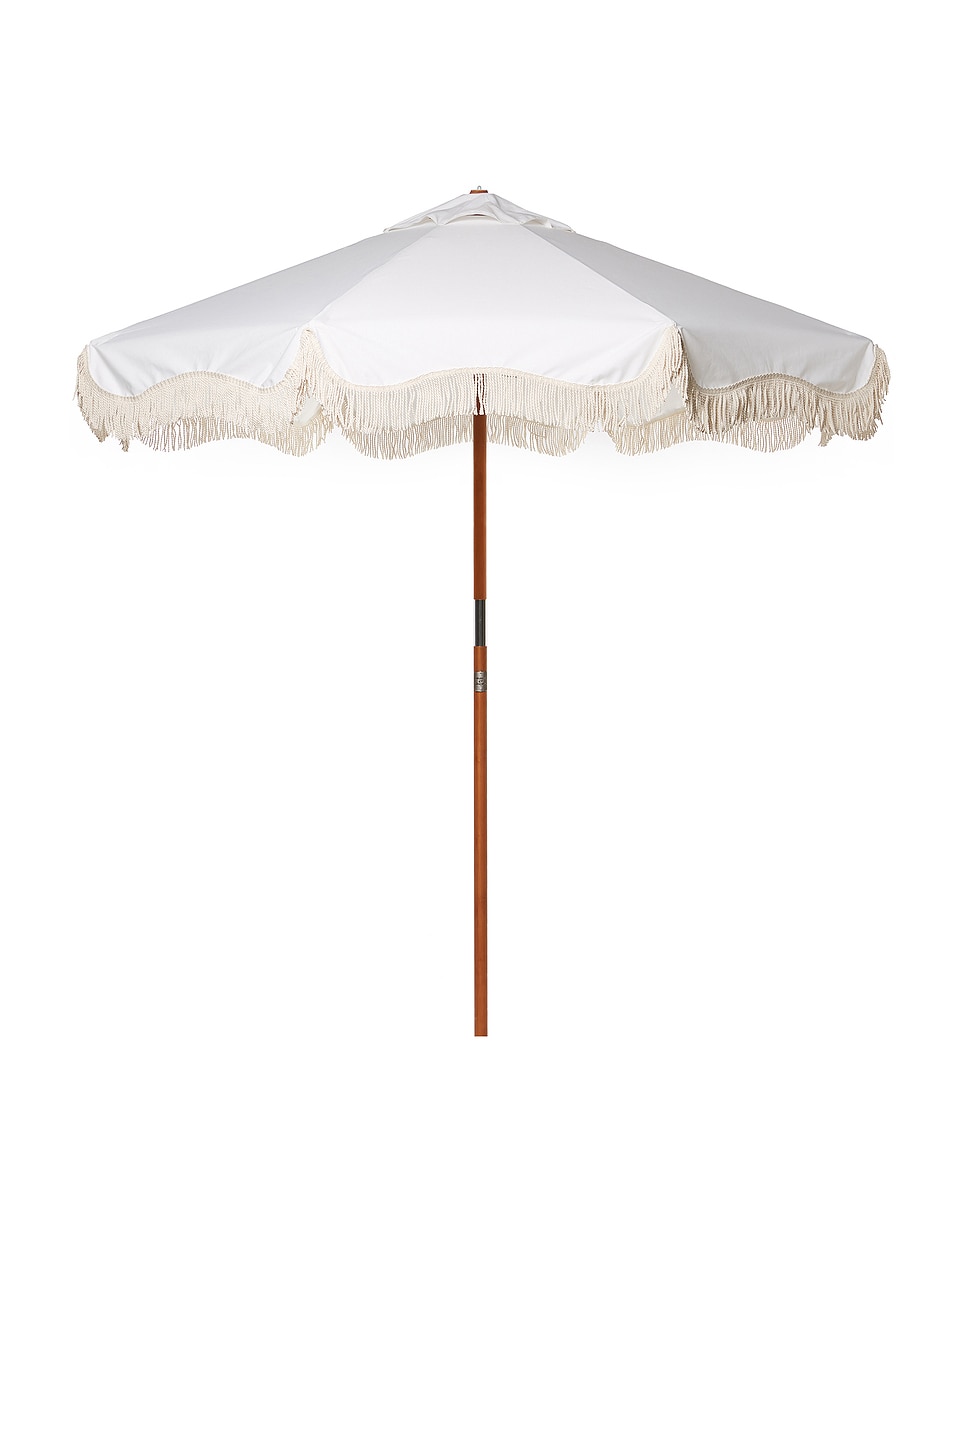 Image 1 of business & pleasure co. Market Umbrella in Antique White